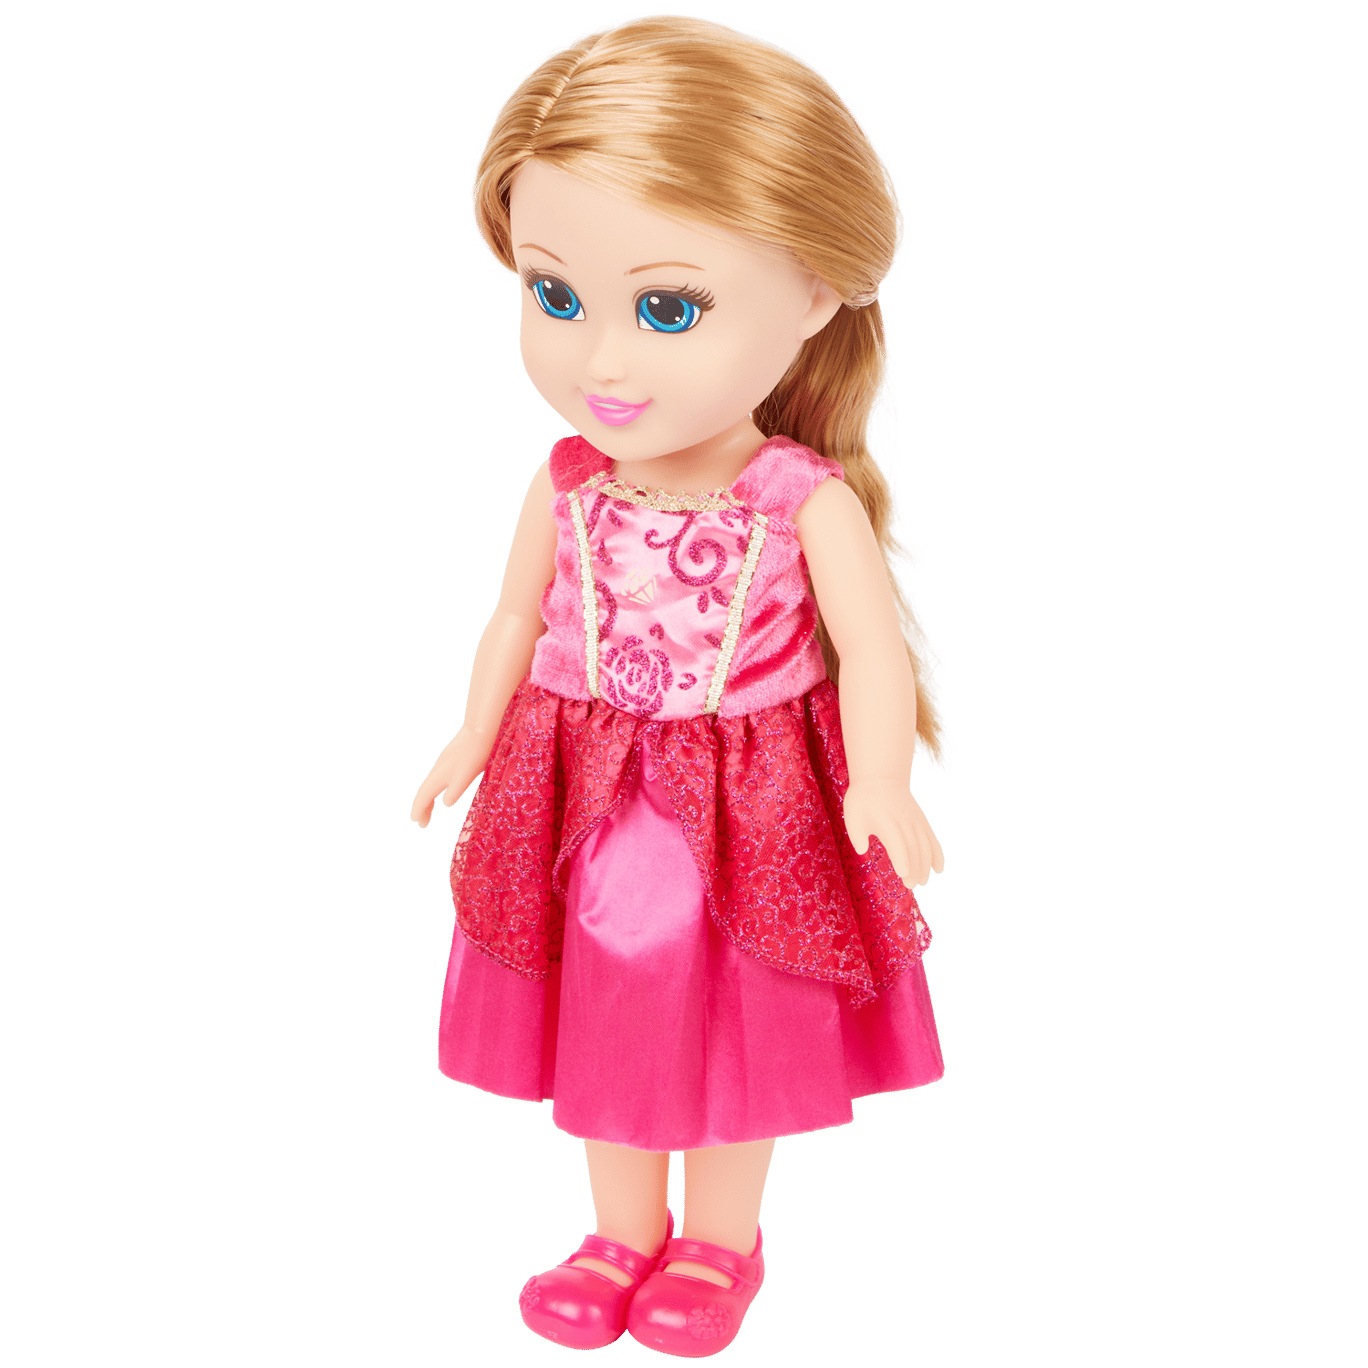 Zuru Sparkle Girlz prinsessenpop